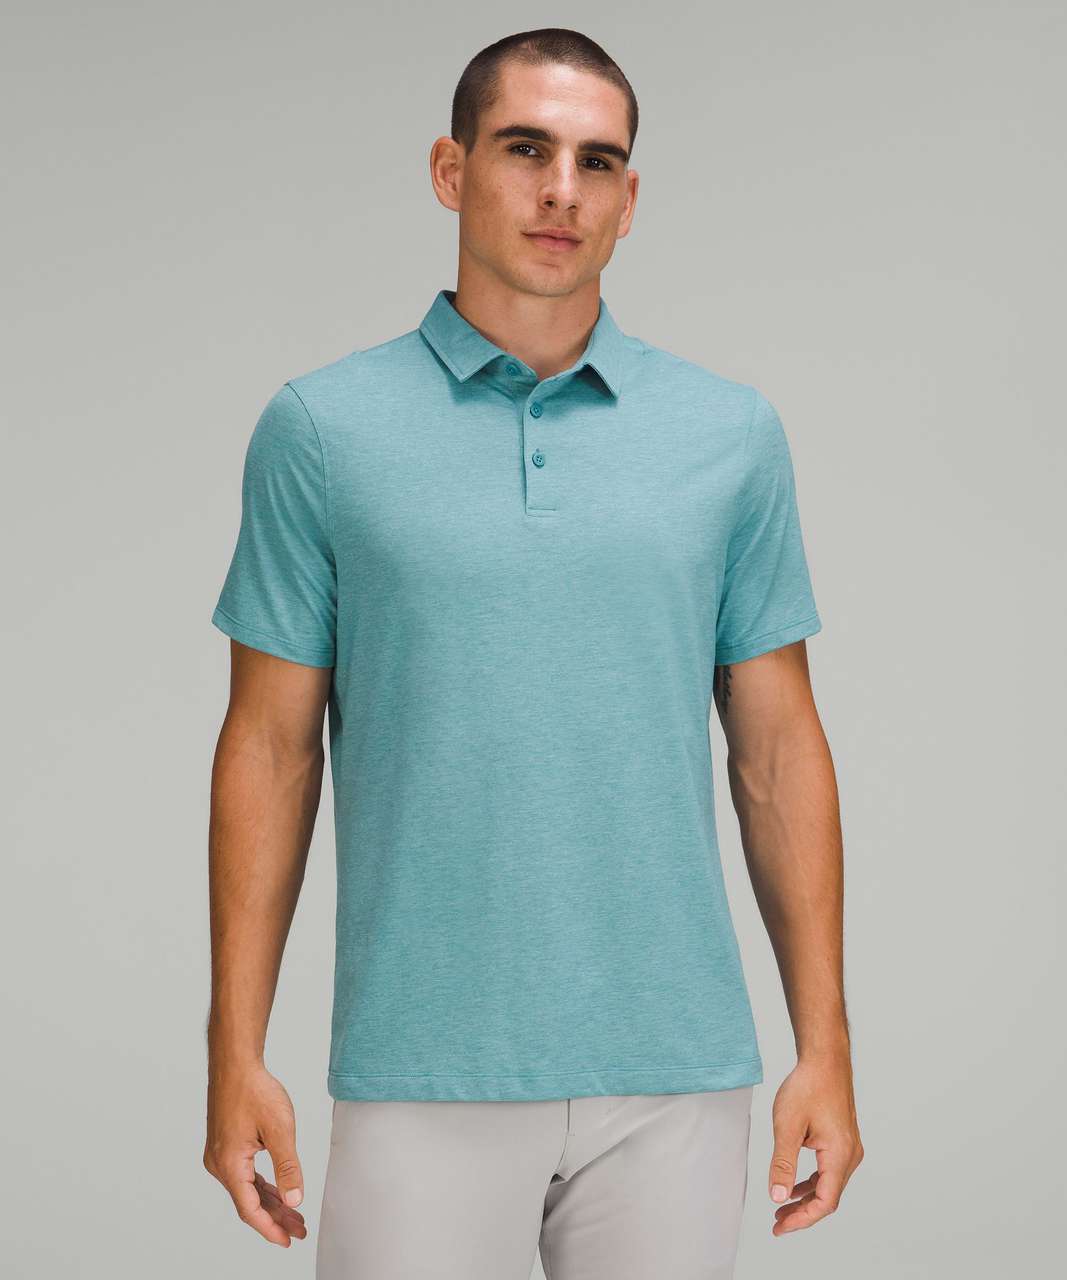 Lululemon Evolution Short Sleeve Polo Shirt - Heathered Crest